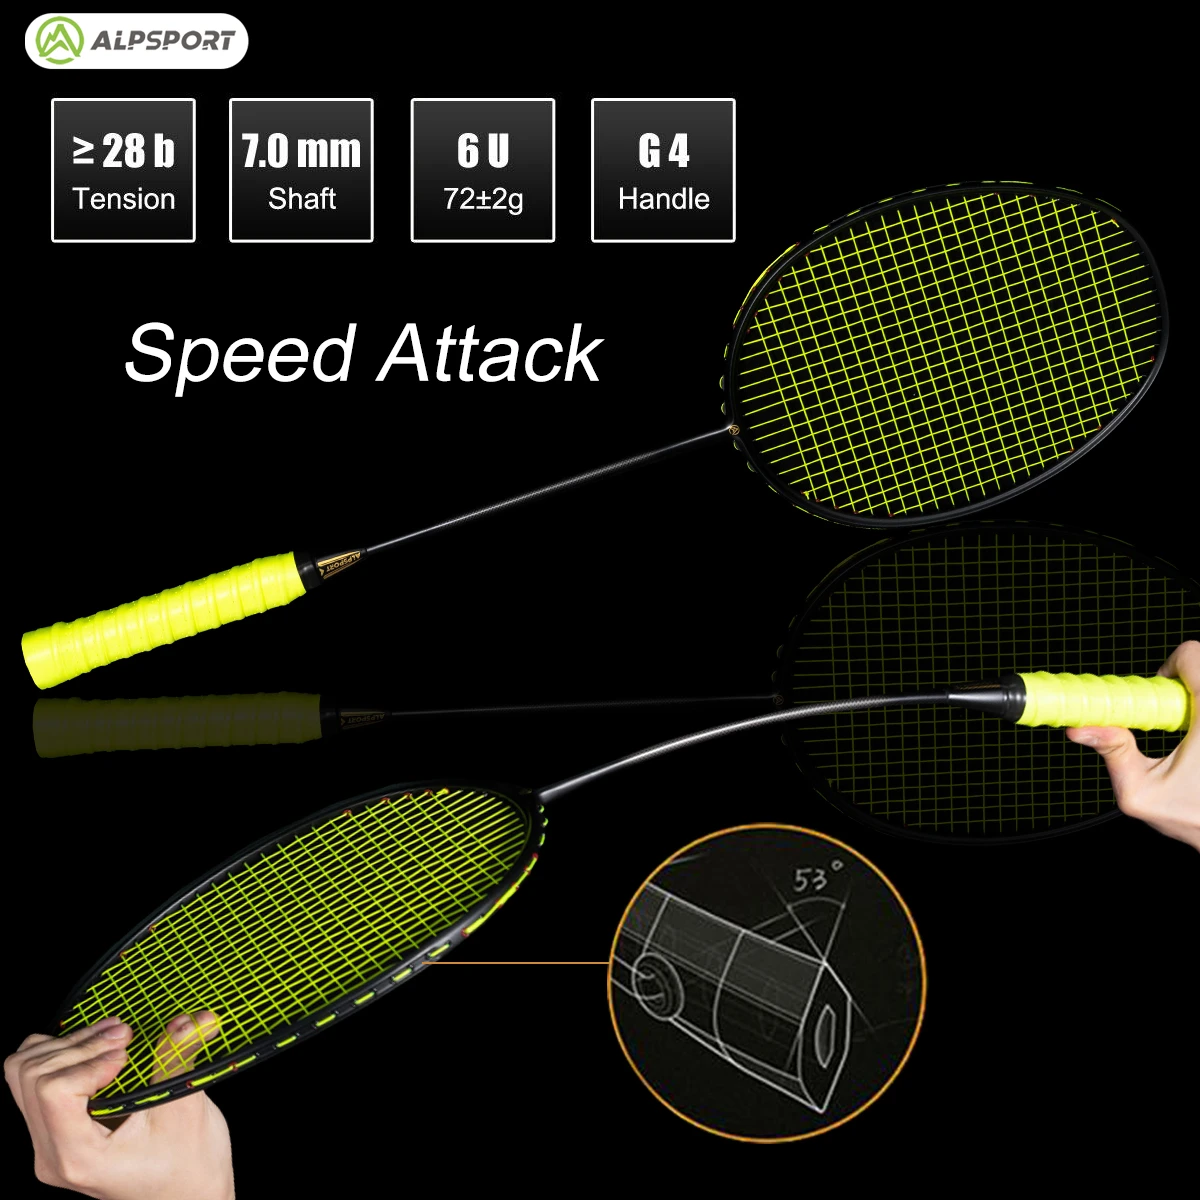 

Alpsport XHP 6U Badminton Racket 90g max 32 lbs T800 Carbon Fiber Racket Includes strings and handle